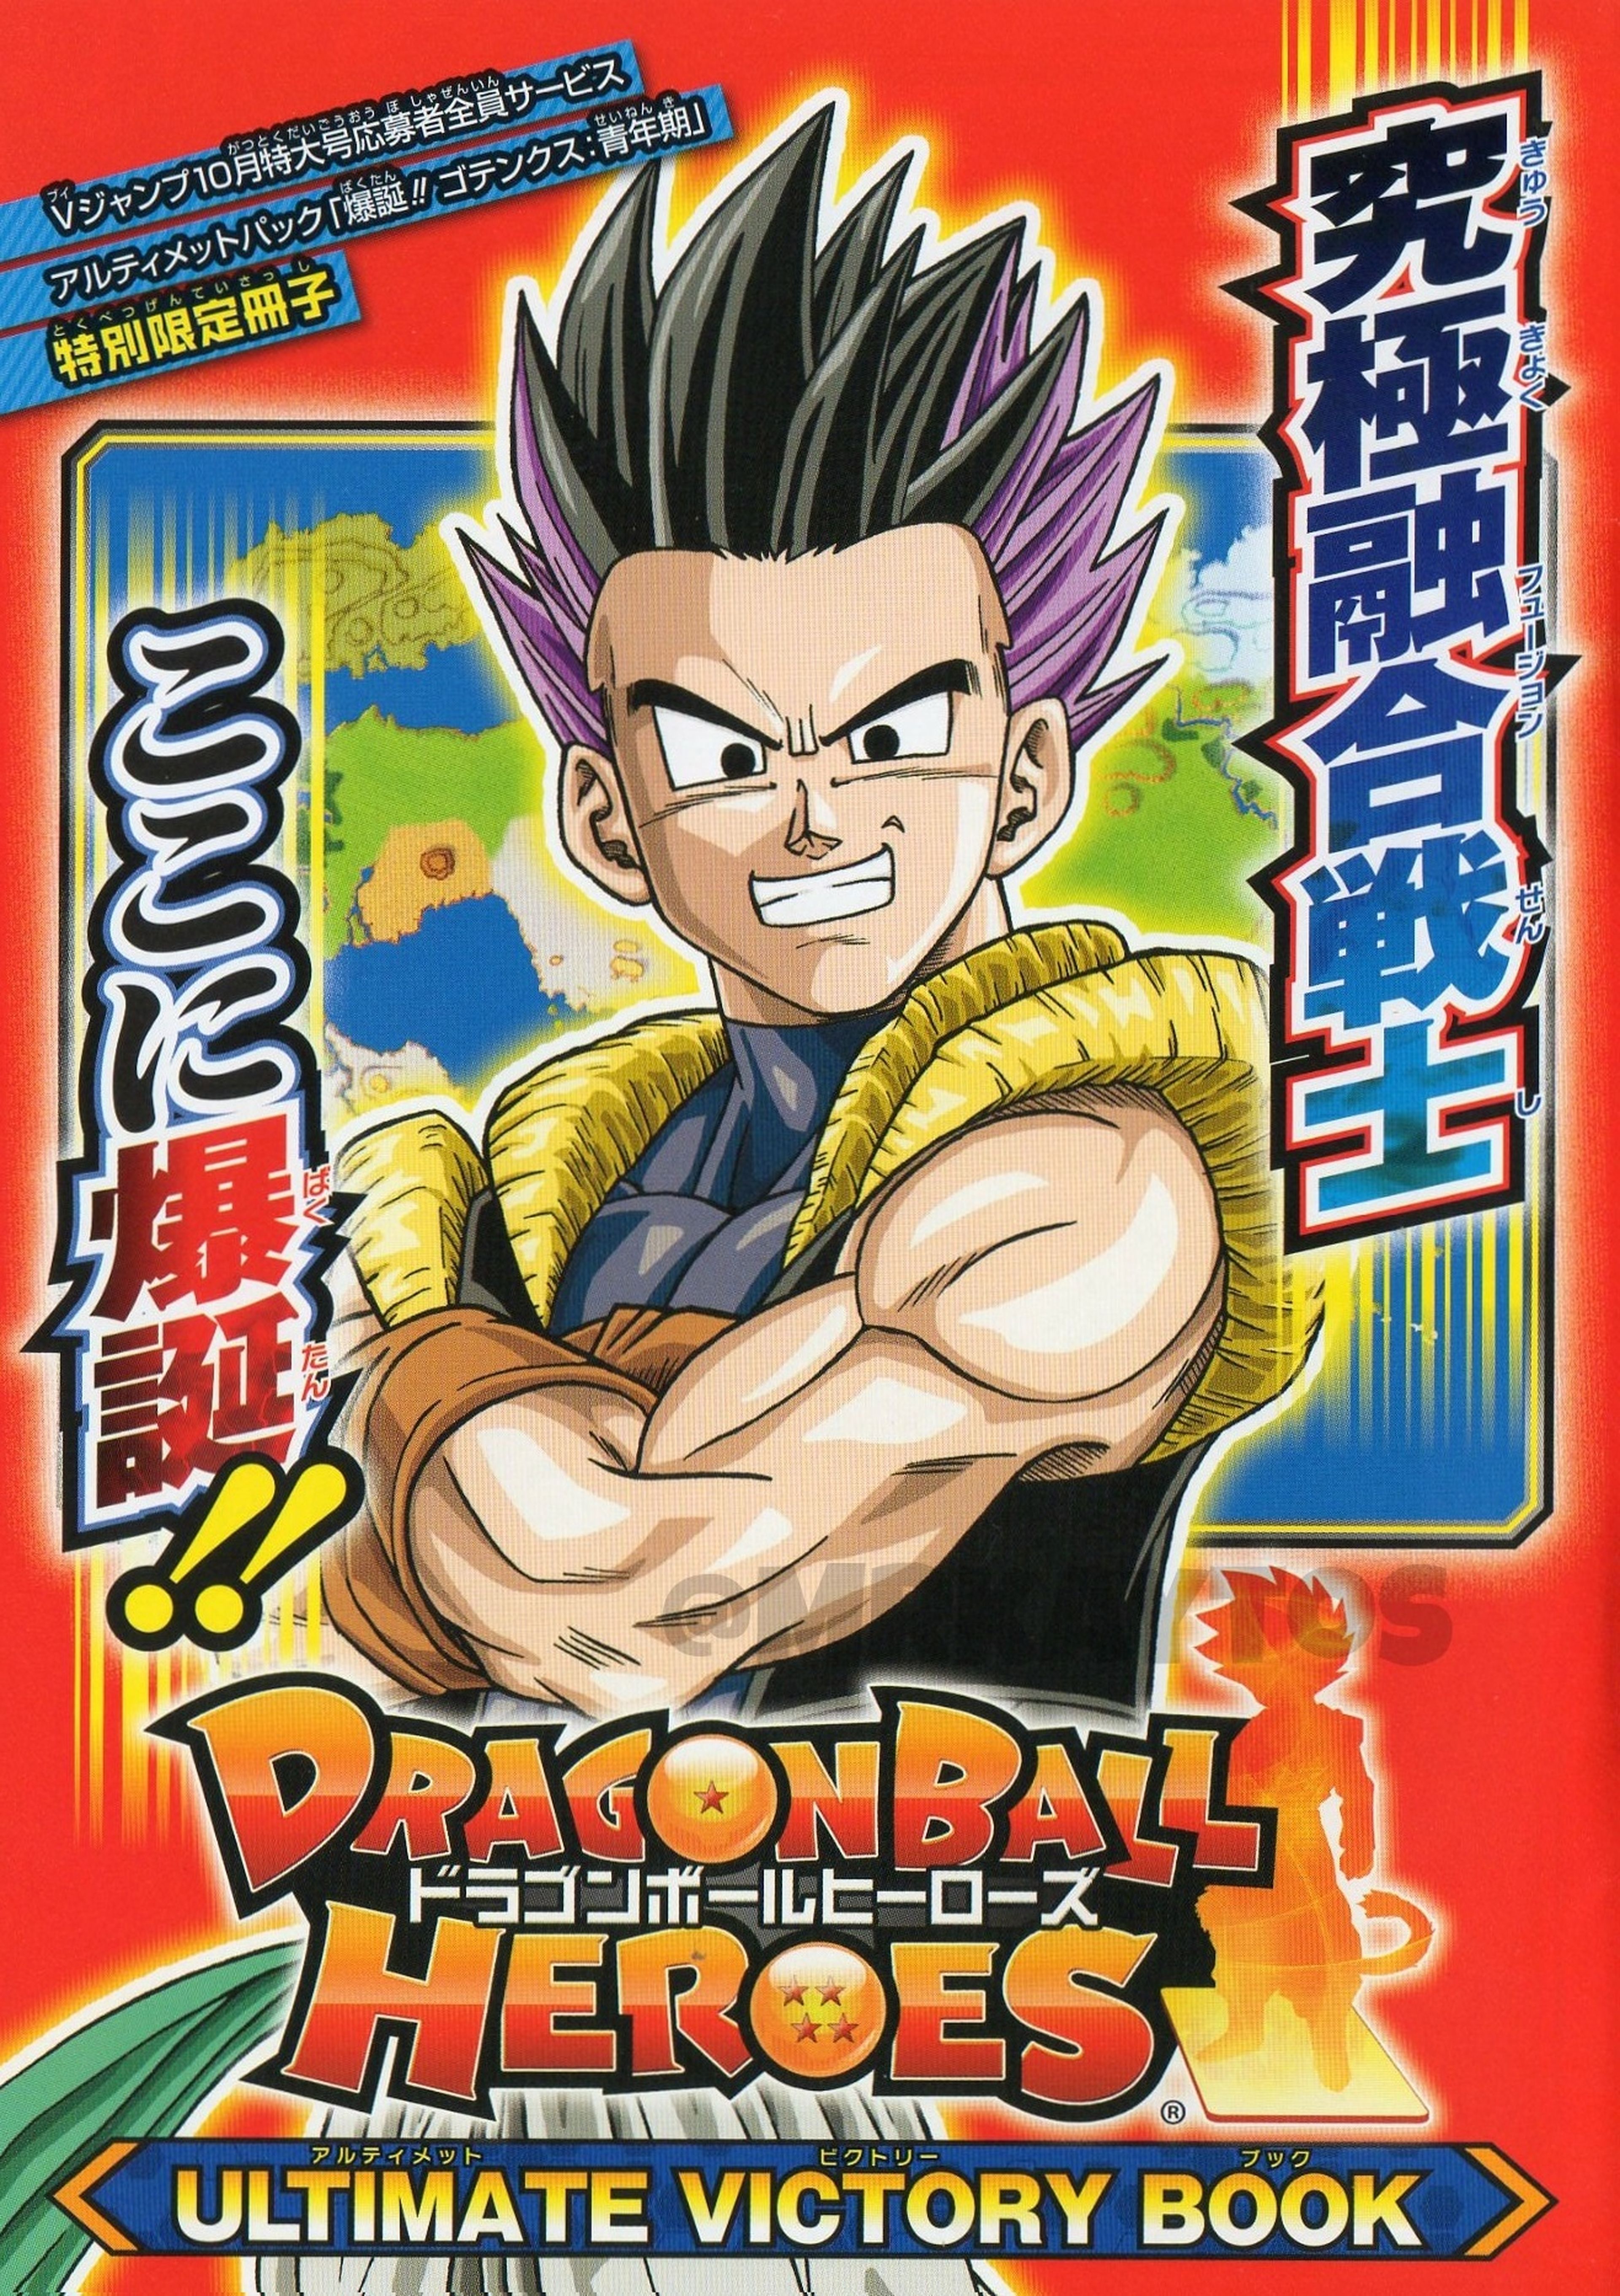 La obra Dragon Ball manga de Toyotaro